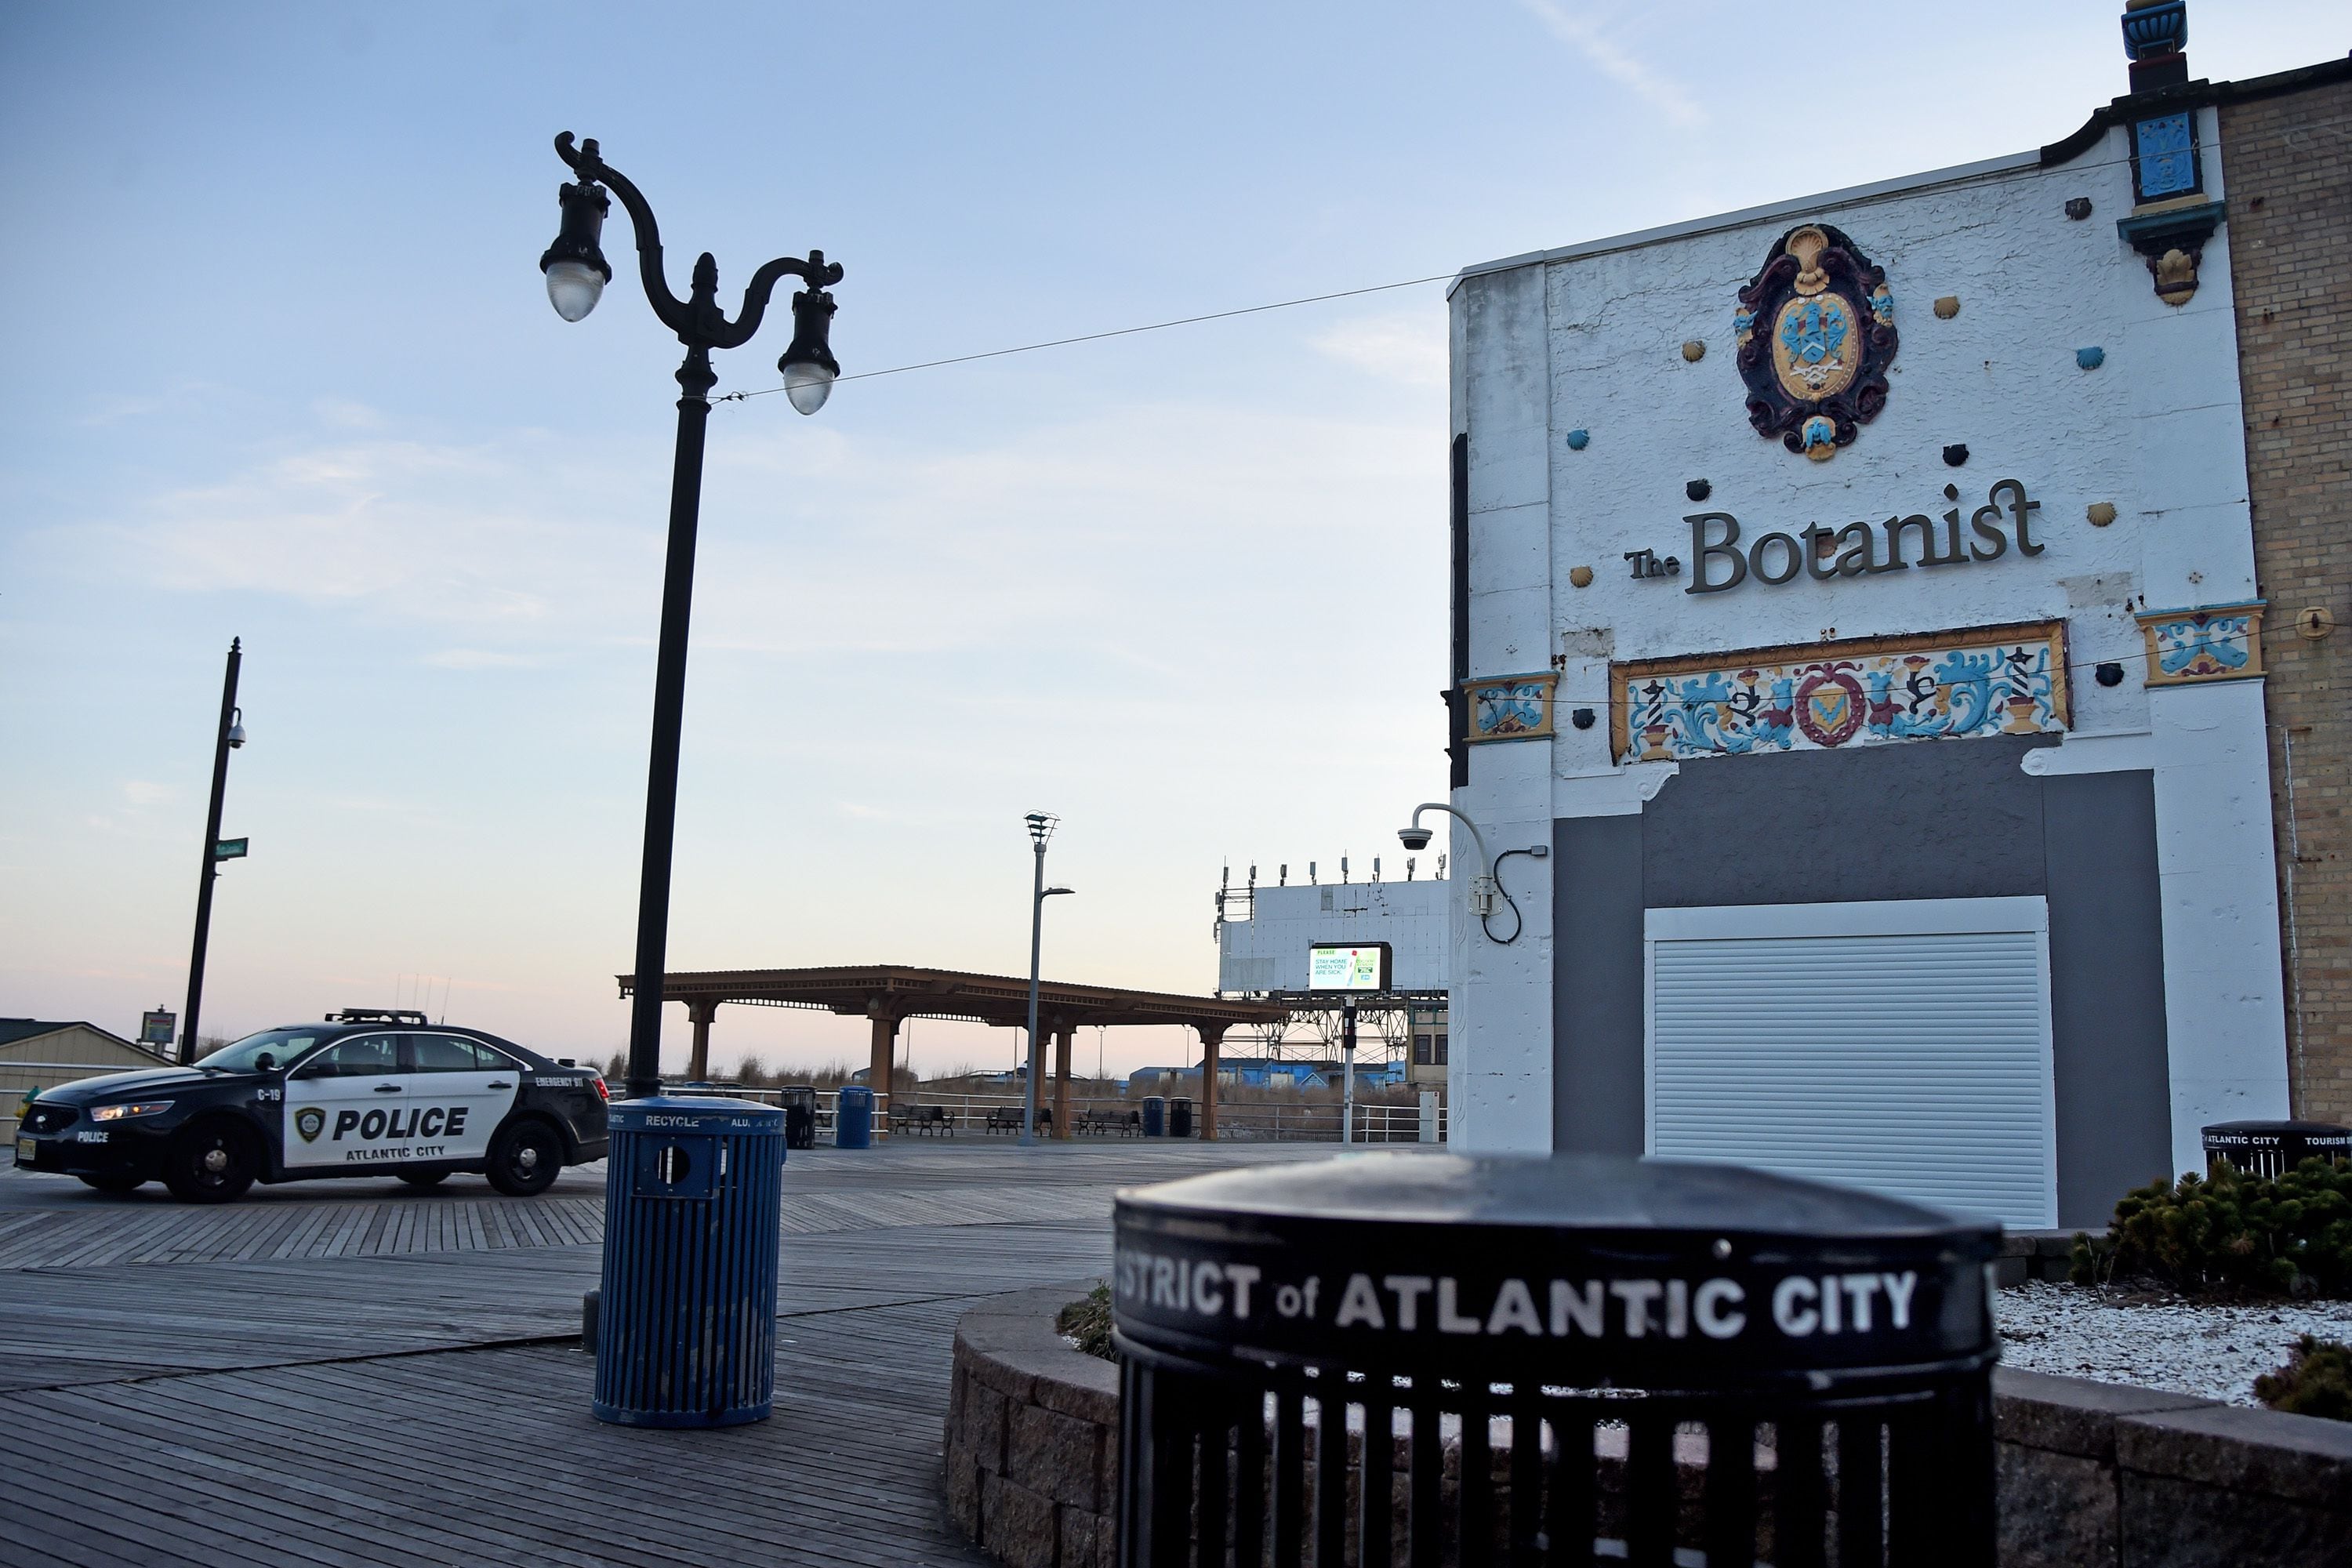 Atlantic City's pleasant surprises